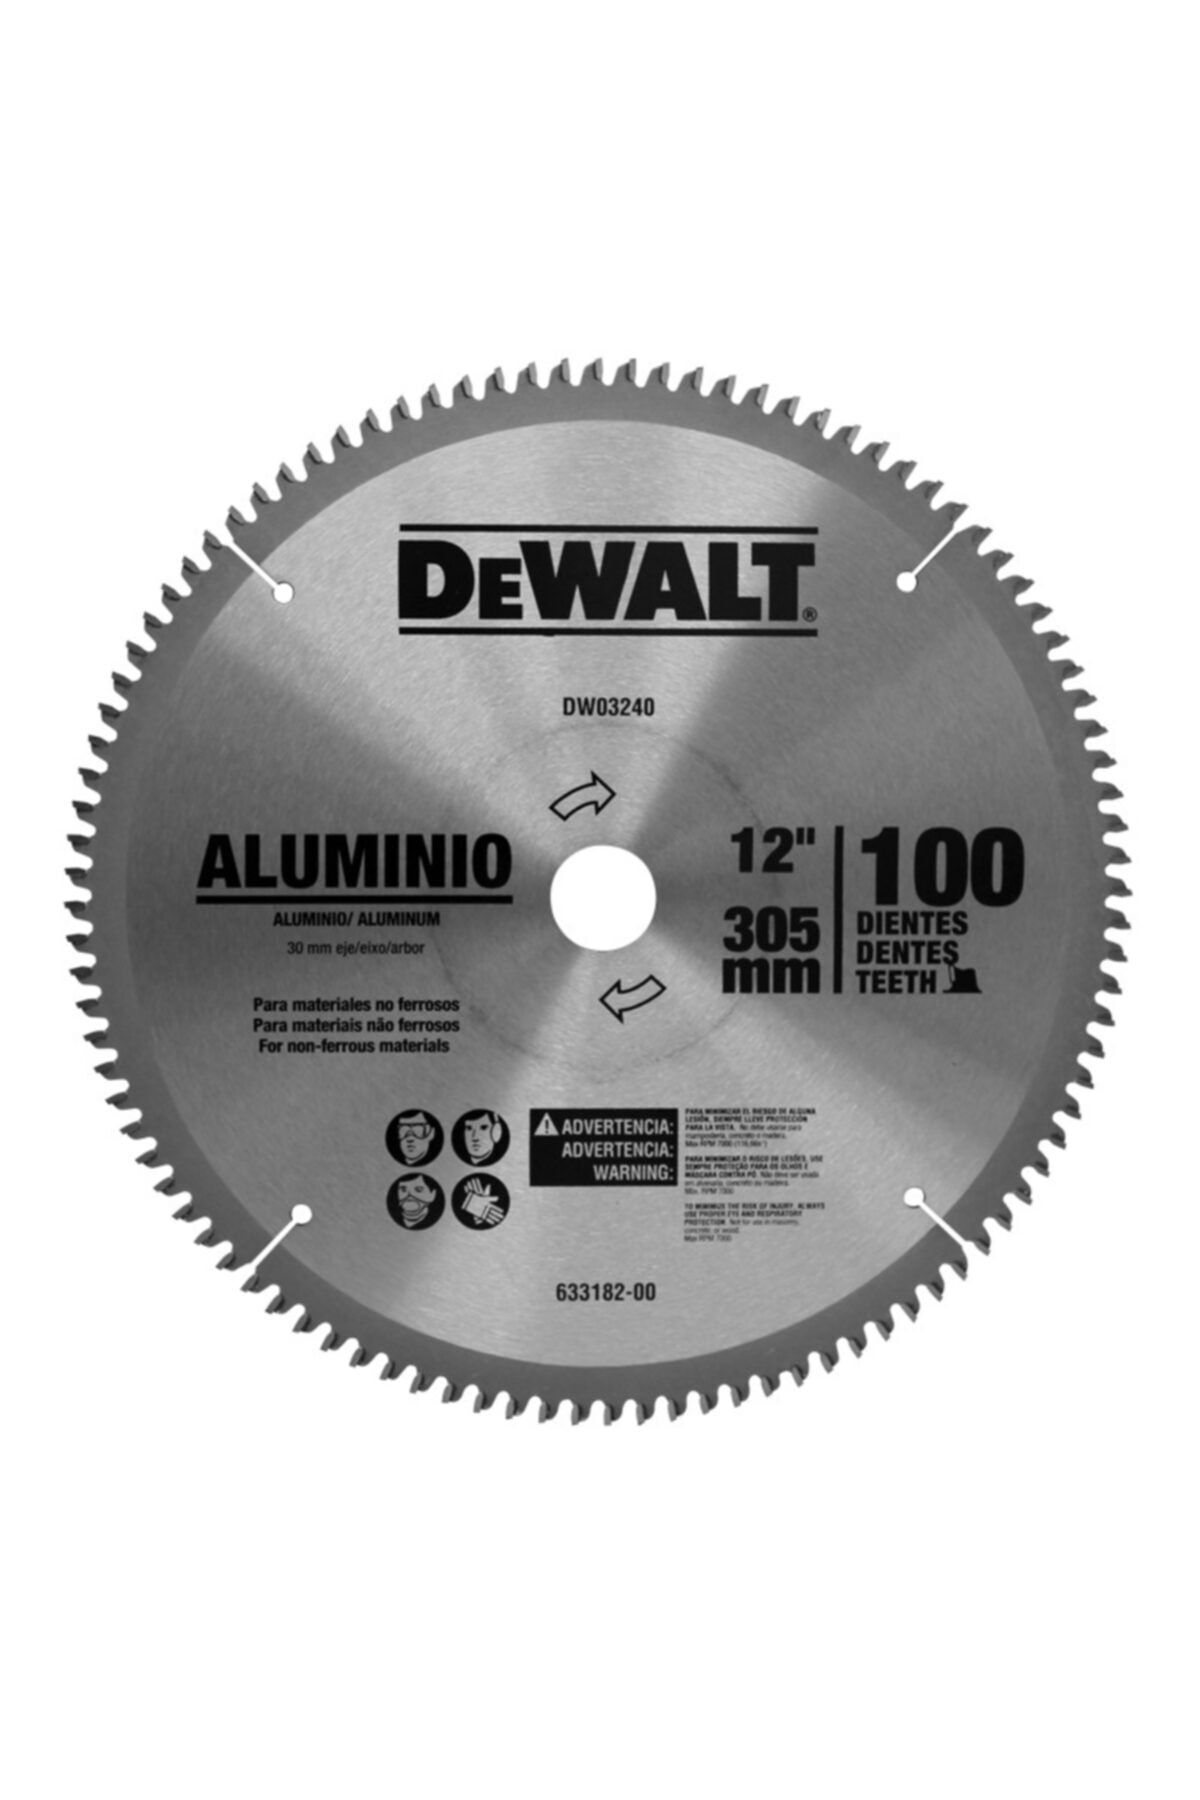 Dewalt Dw03240 Alüminyum Testere